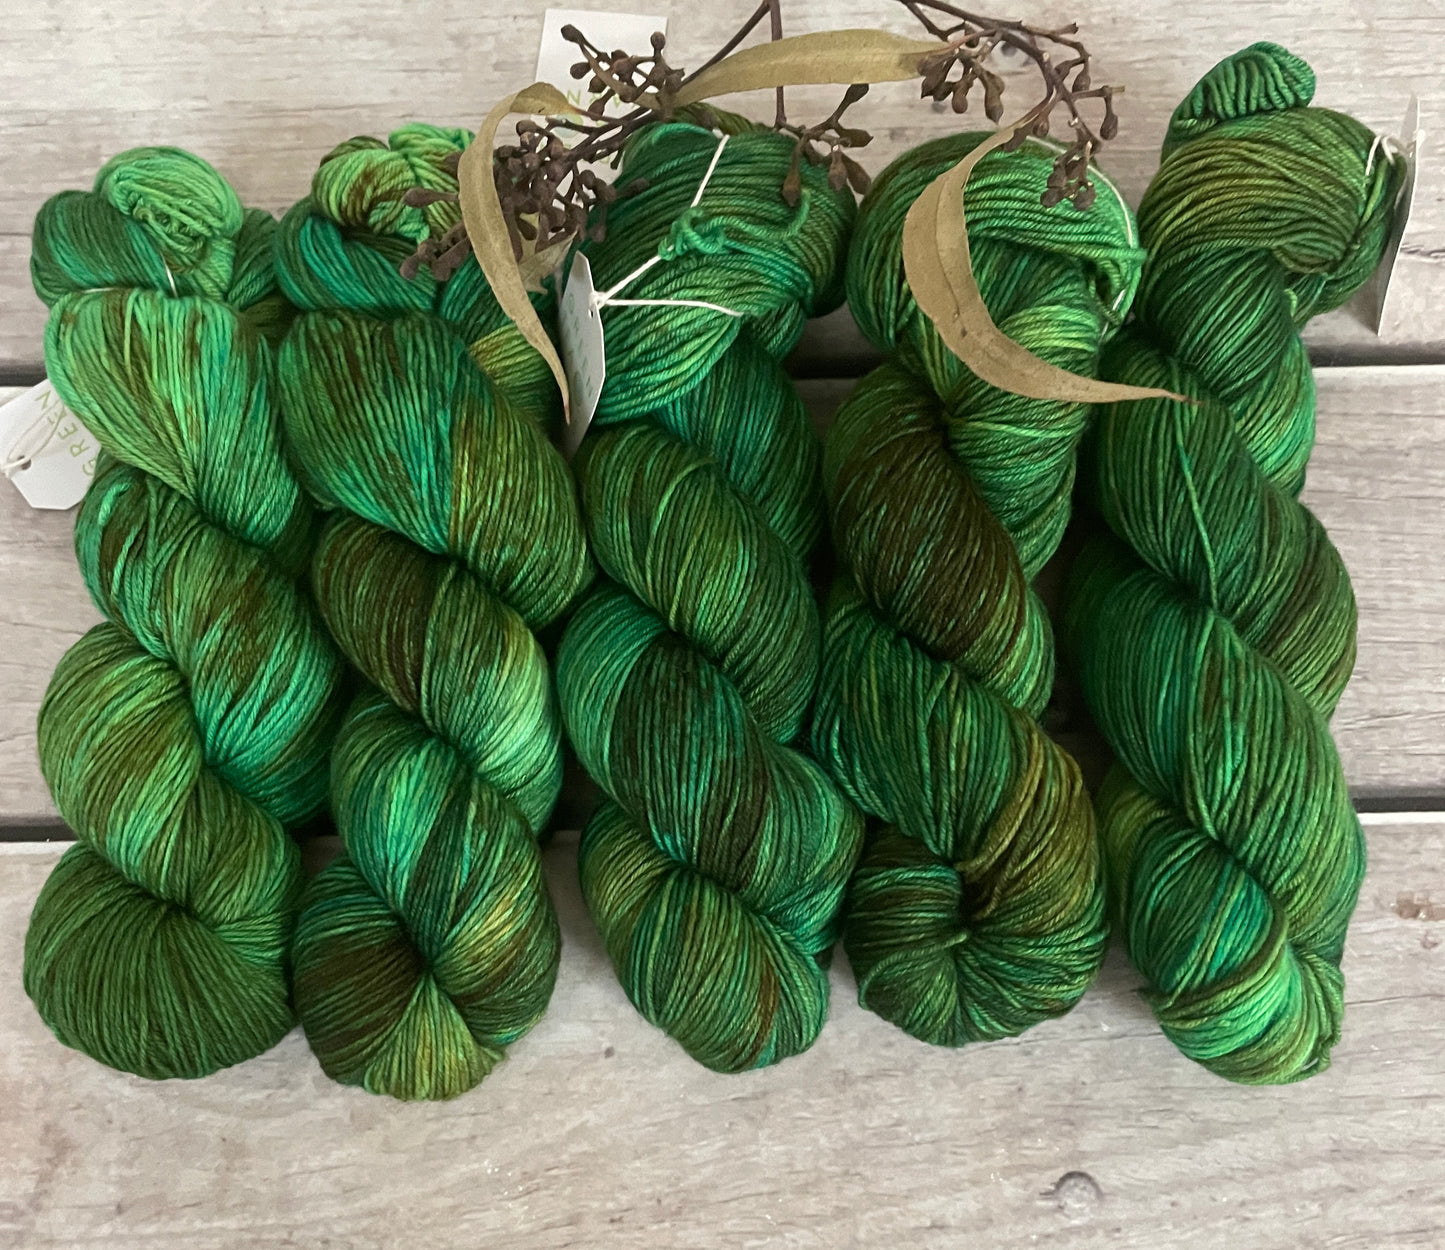 Ocean Kelp - sock yarn in merino and nylon - Darjeeling